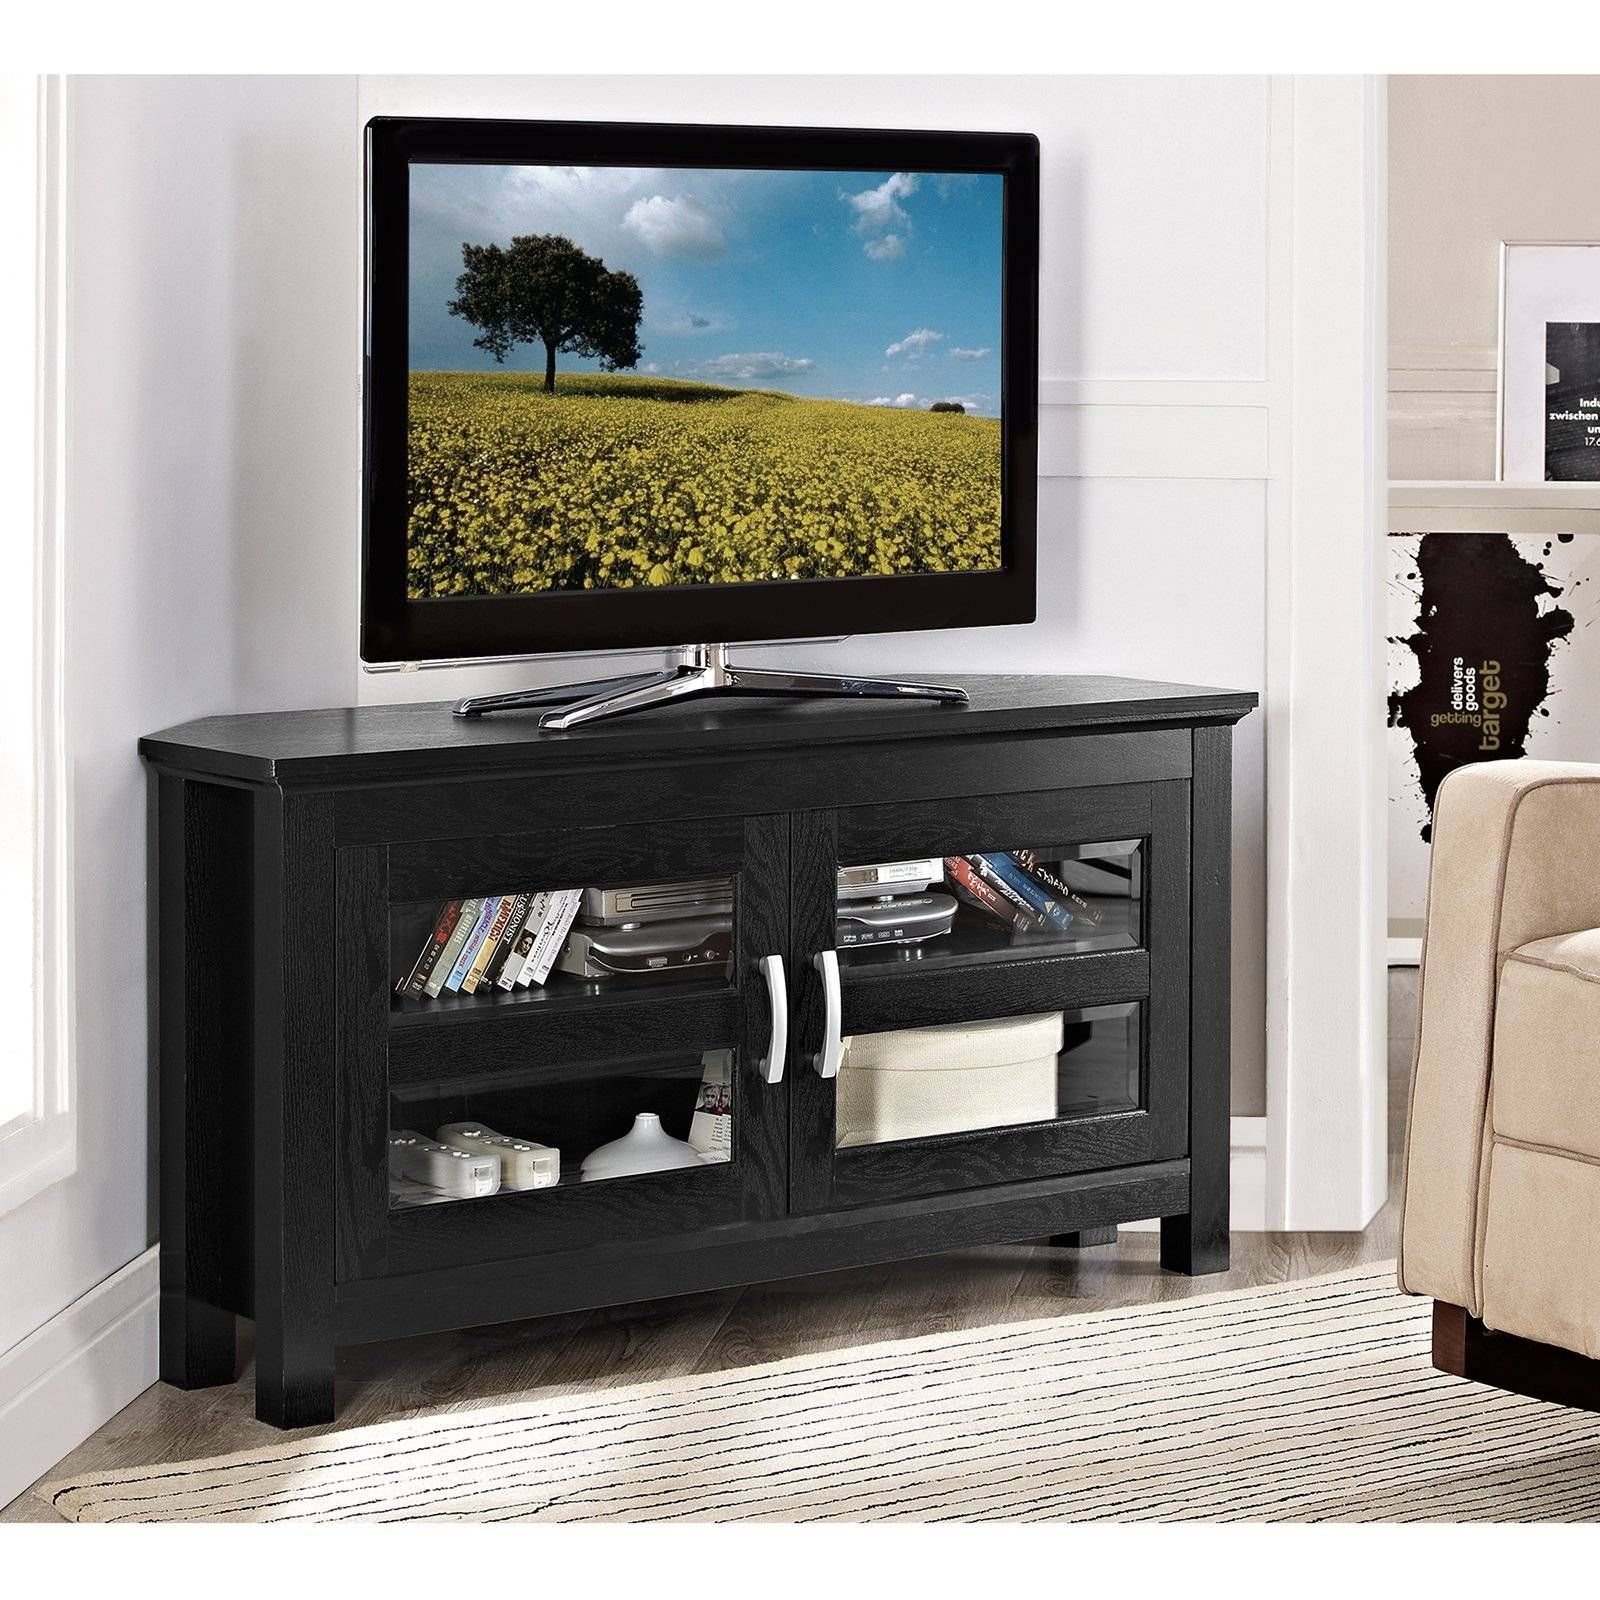 Compton Black Corner Tv Stand – Walmart For Black Wood Corner Tv Stands (View 2 of 15)